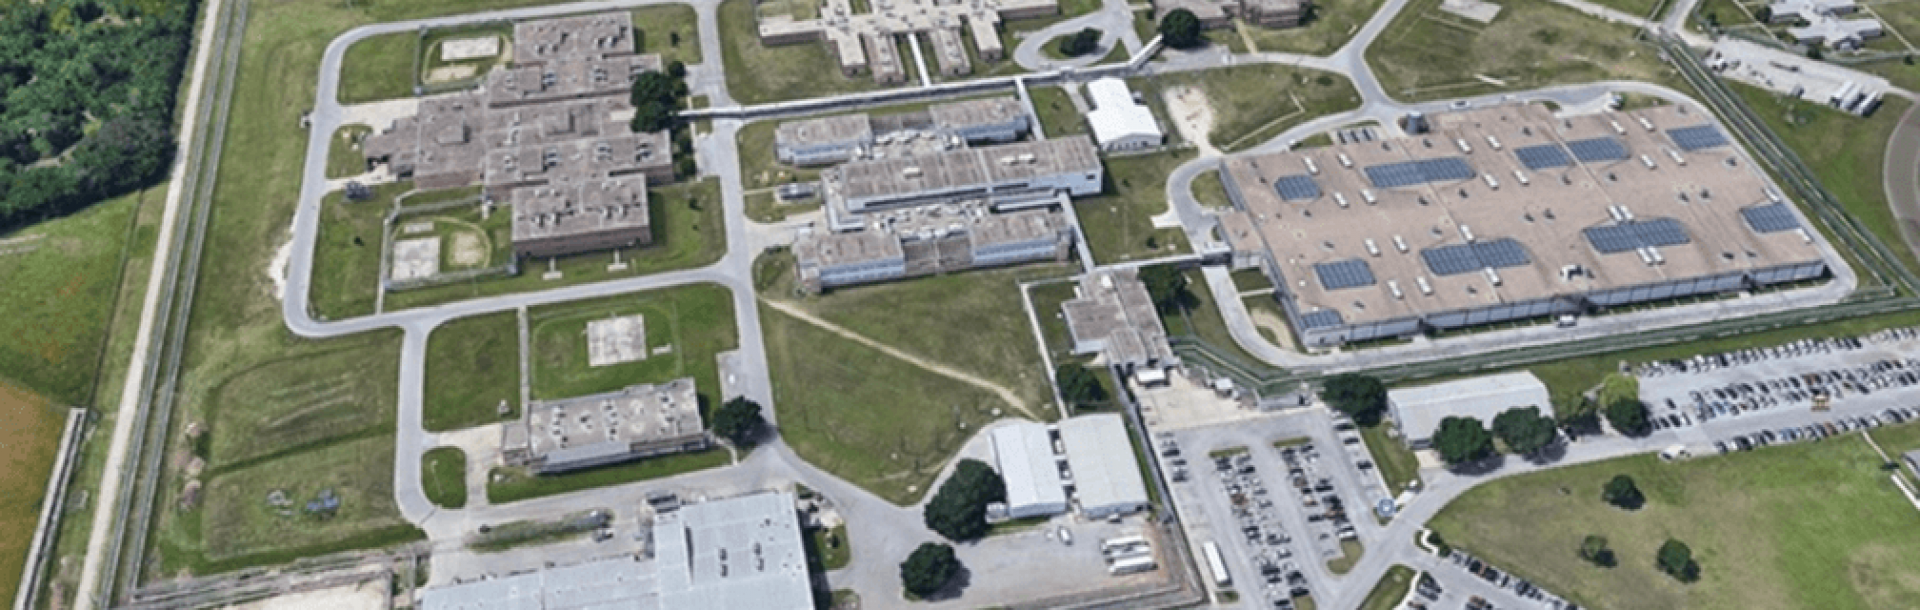 Travis County Correctional Center & Jail